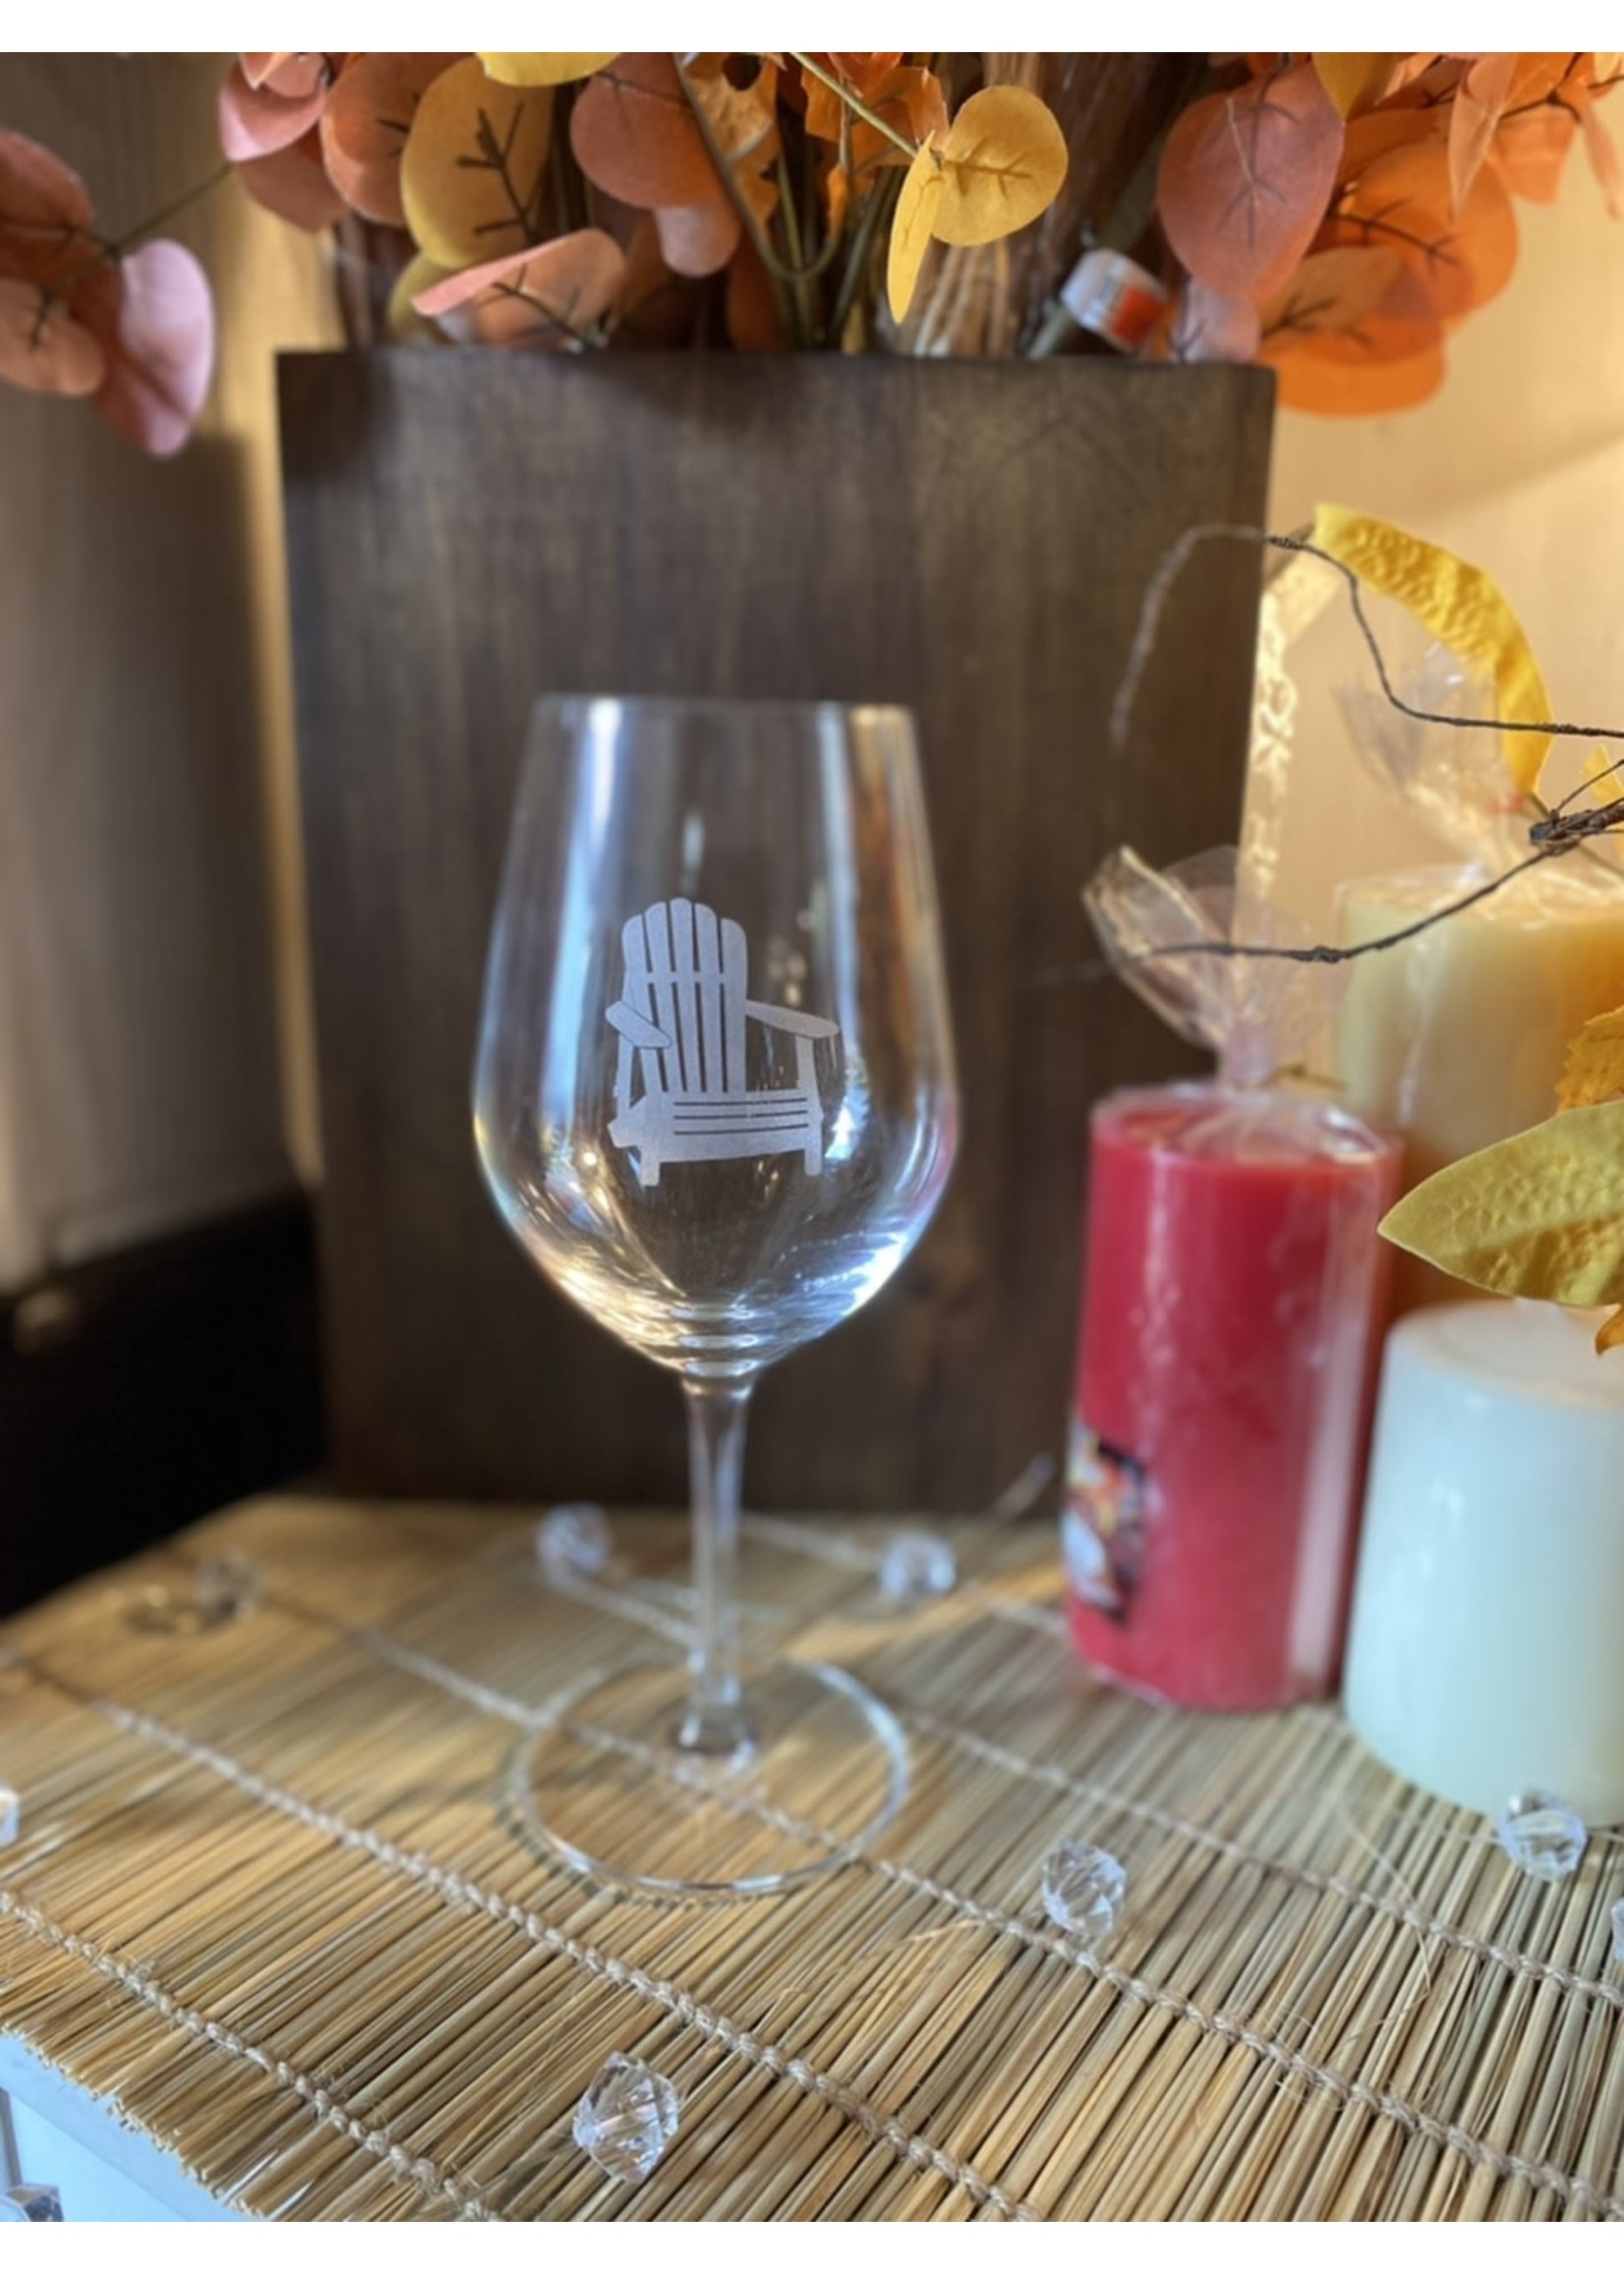 Etched Crystal Stemmed Wine Glass